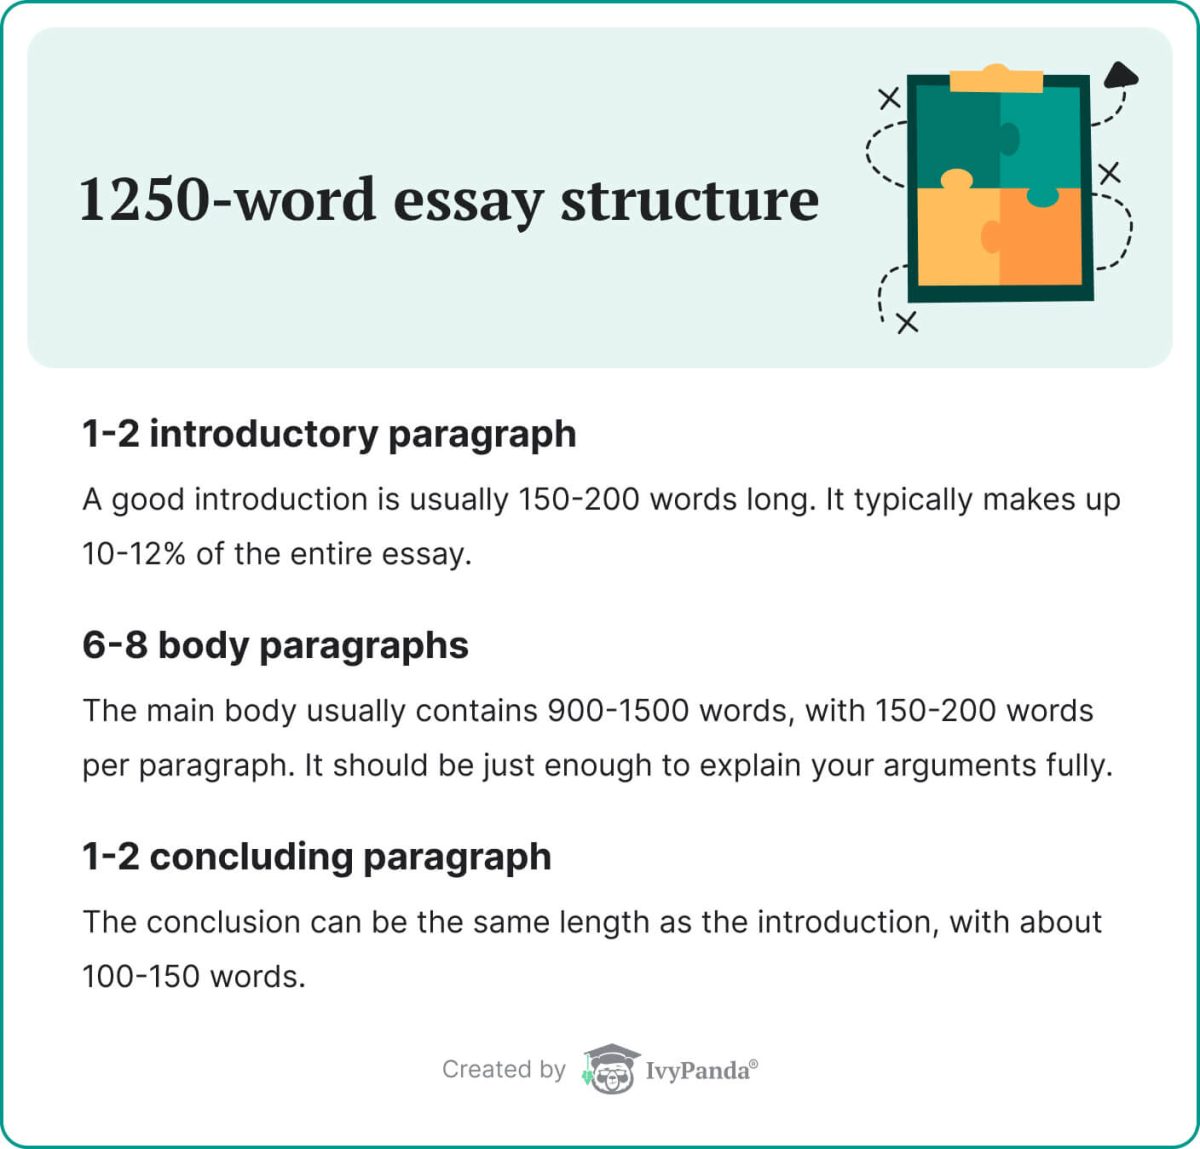 A description of a 1250-word essay structure.